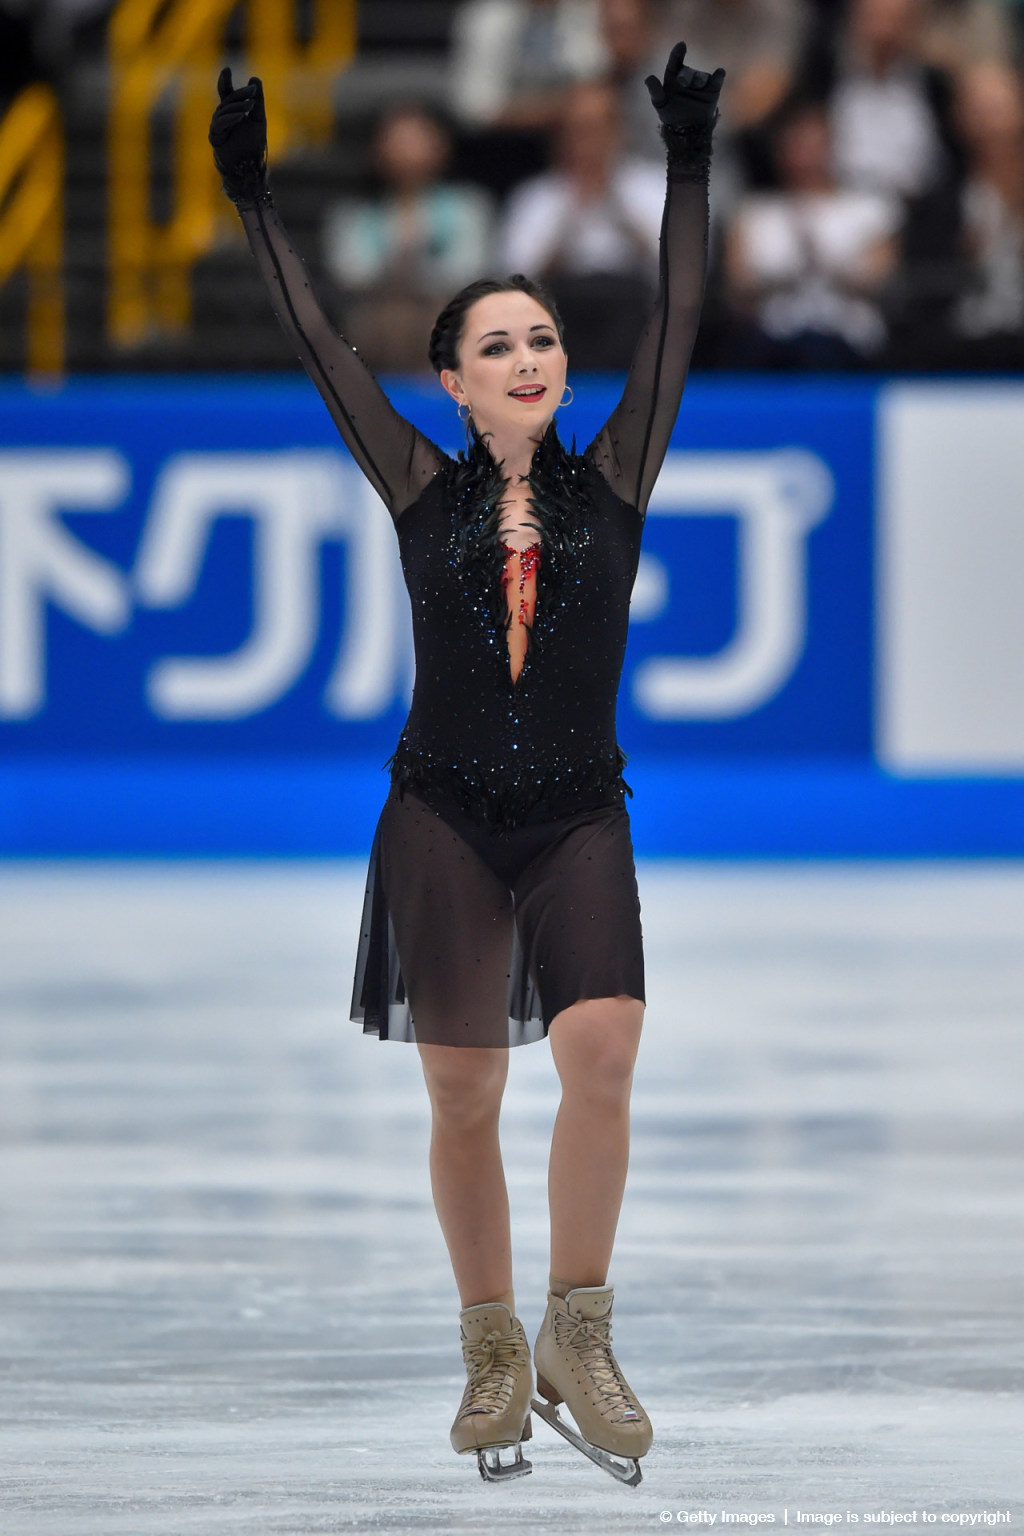 Japan Open 2015 Figure Skating